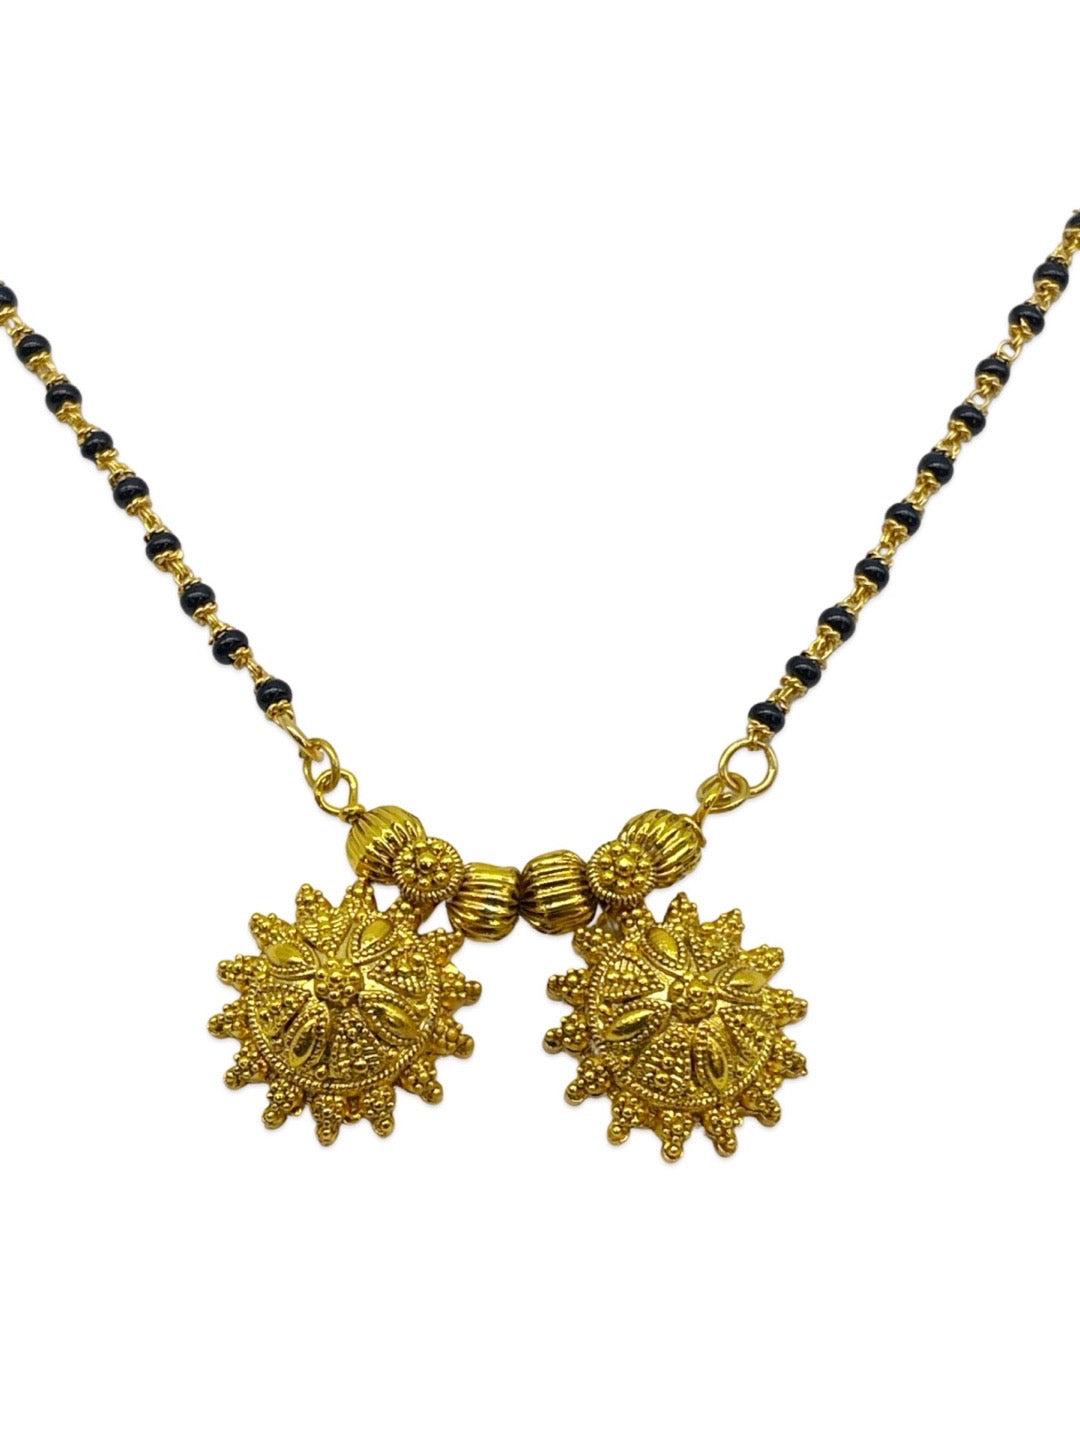 Maharashtrian Long Mangalsutra Vati Designs Black Beads Chain